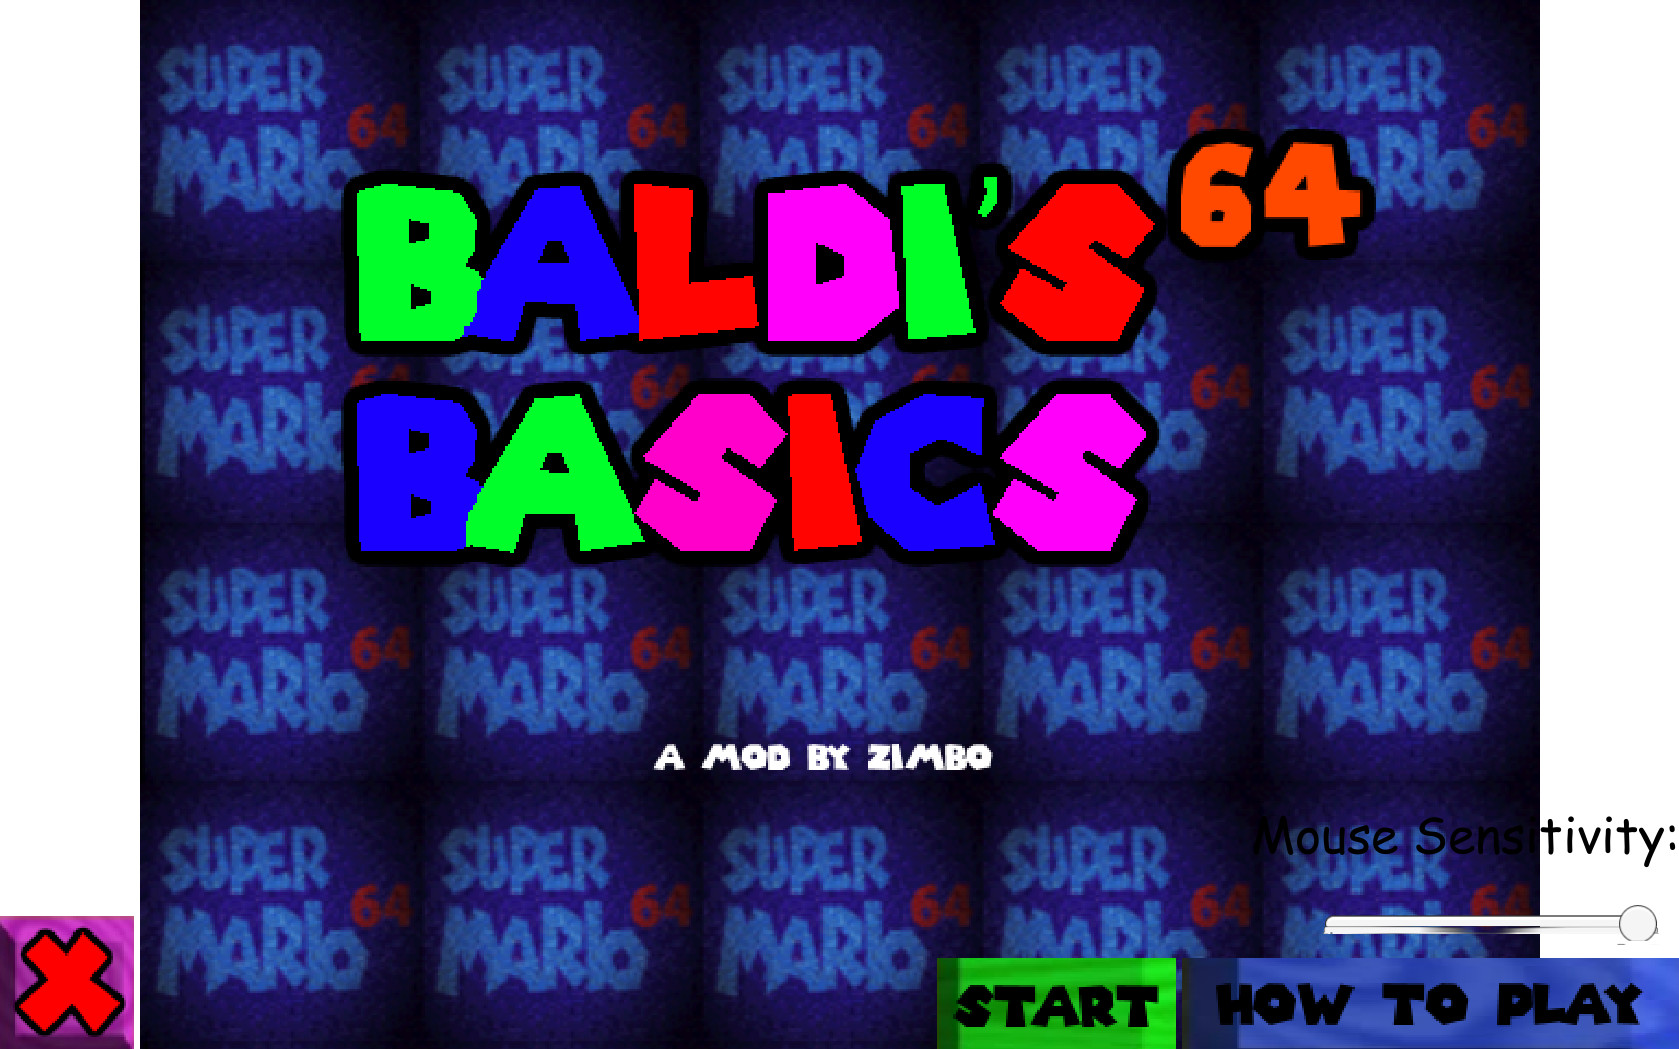 Modding the textures for Baldi's Basics android [Baldi's Basics